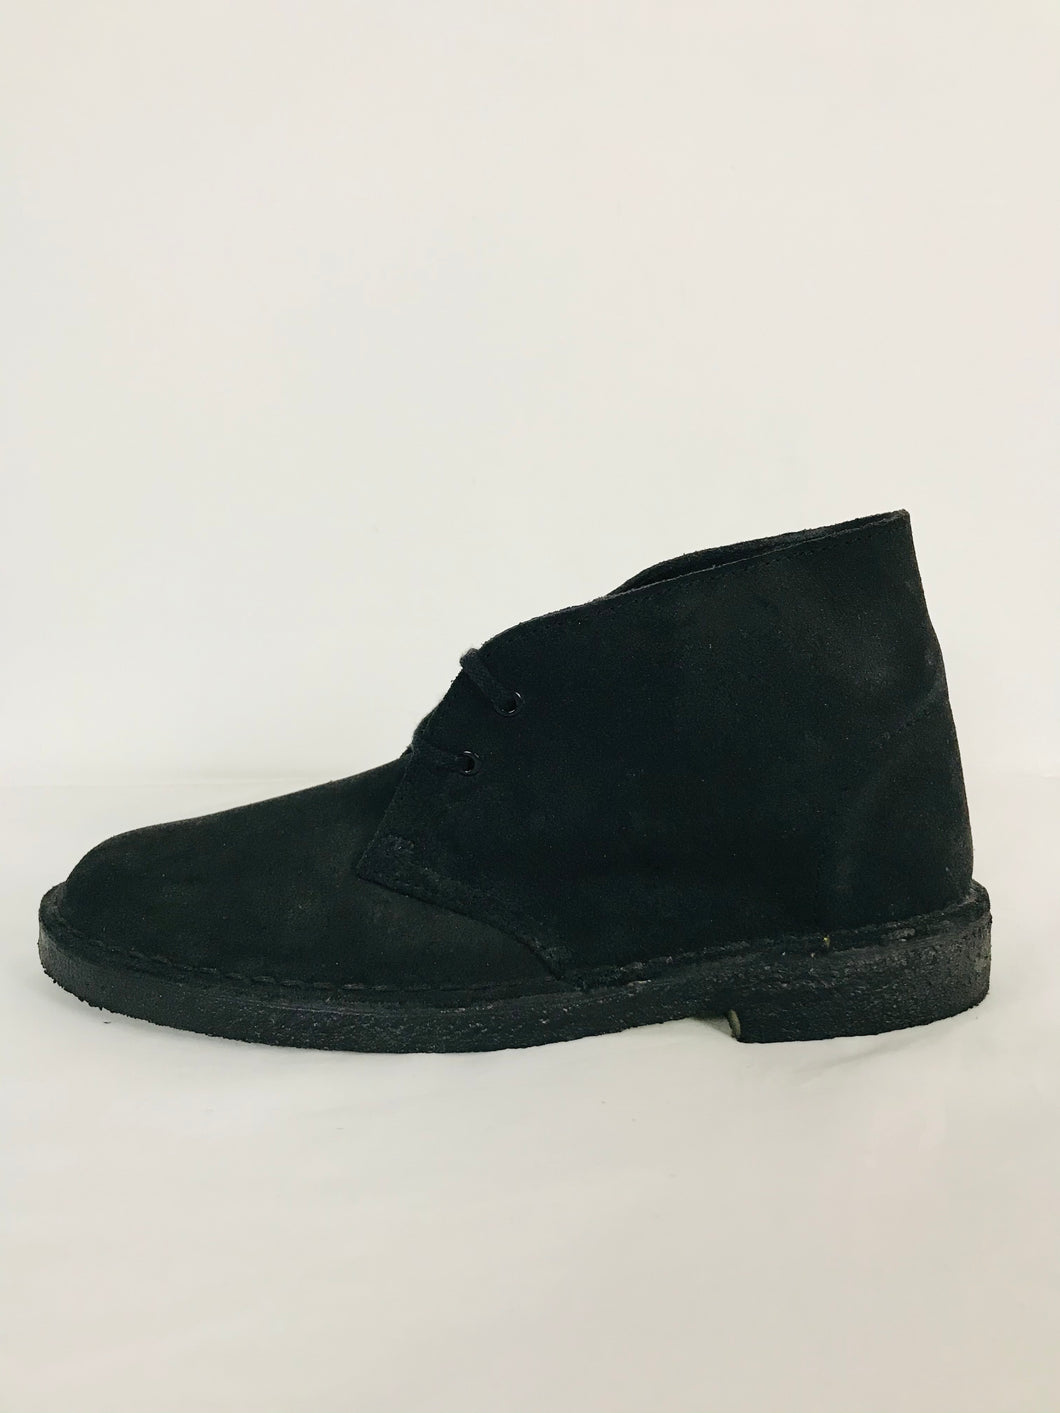 Clarks Women’s Suede Desert Ankle Boots | UK 6.5 EU 40 | Black